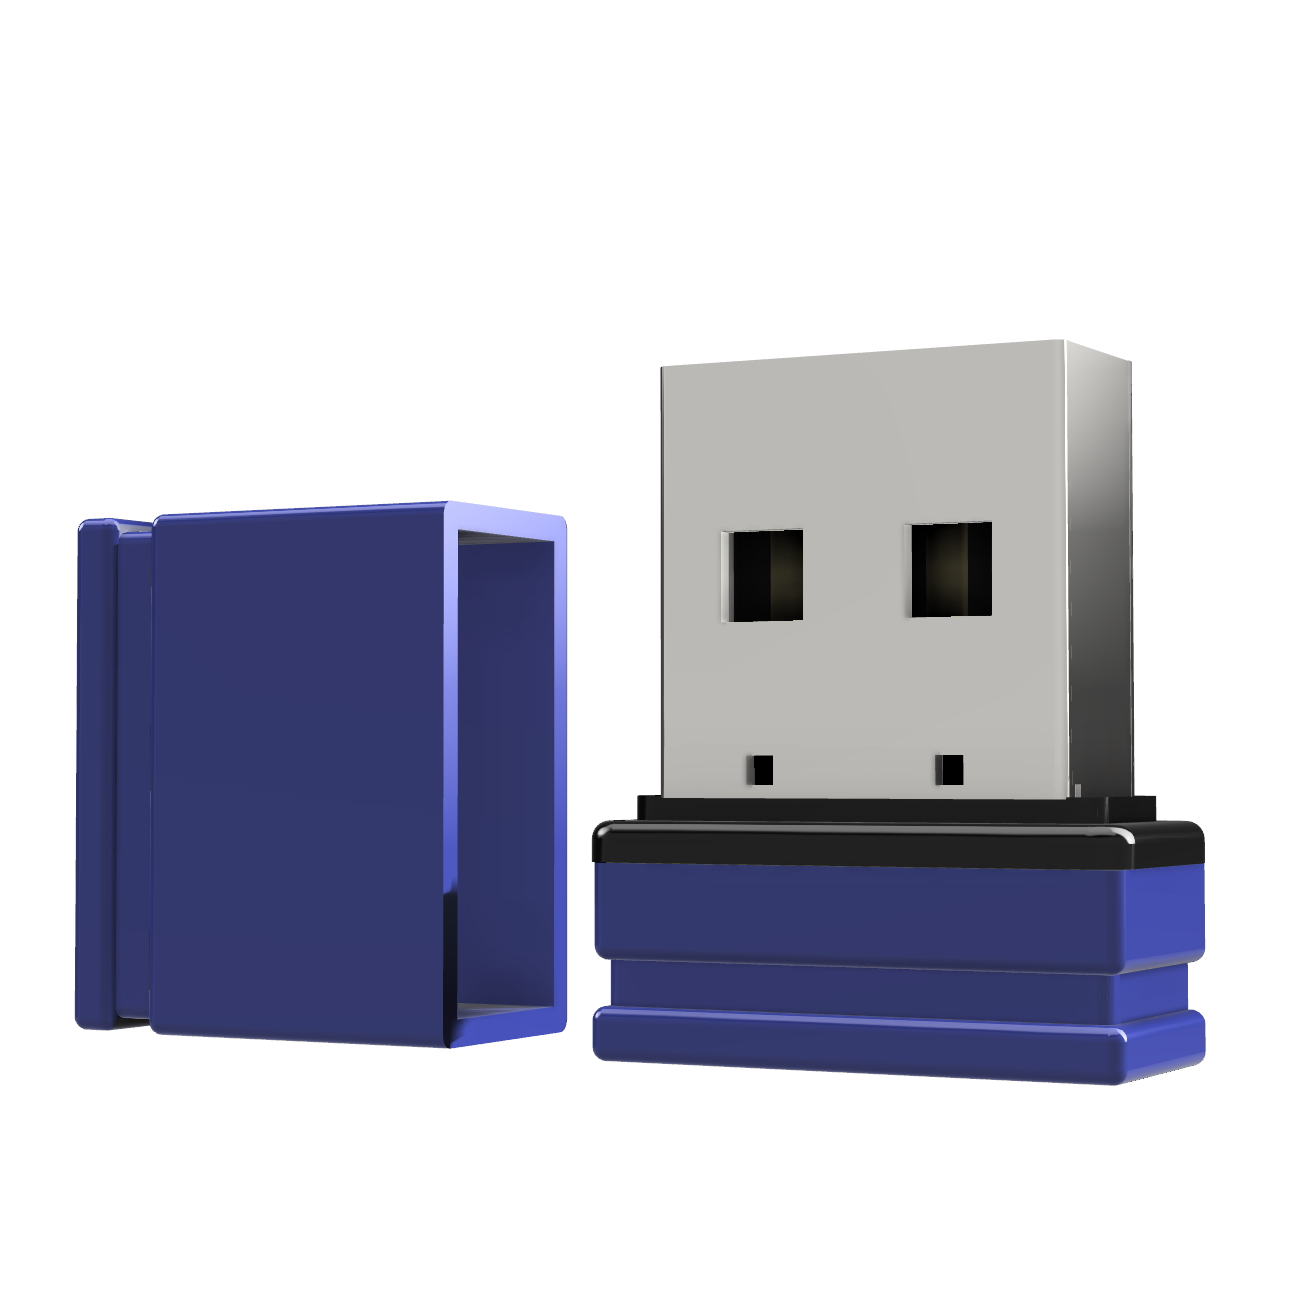 USB GERMANY USB-Stick ®ULTRA 16 P1 (Blau/Schwarz, Mini GB)